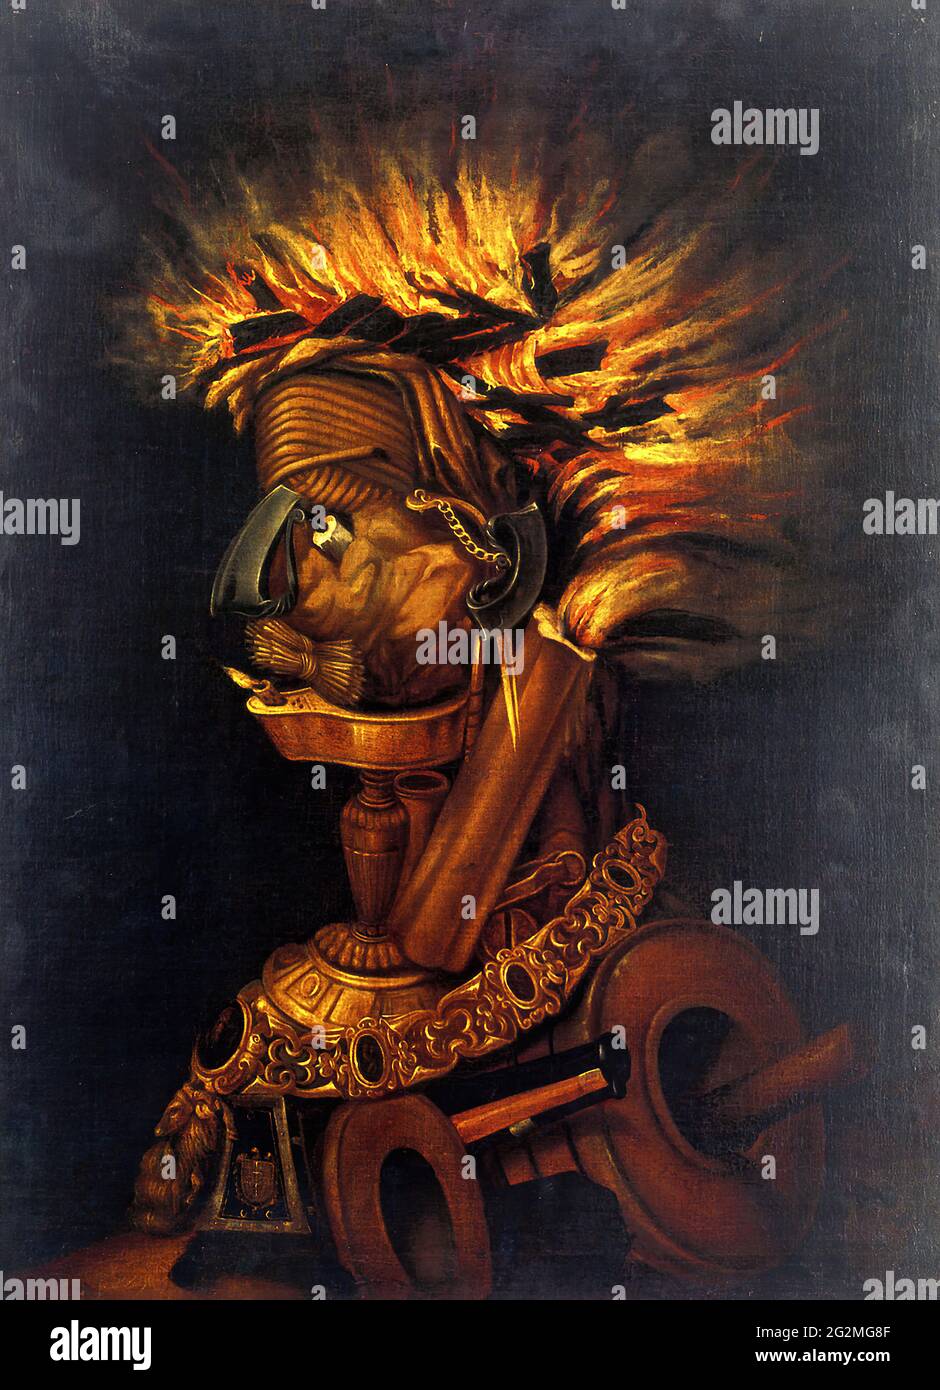 Giuseppe Arcimboldo - Fire 02 Stock Photo - Alamy